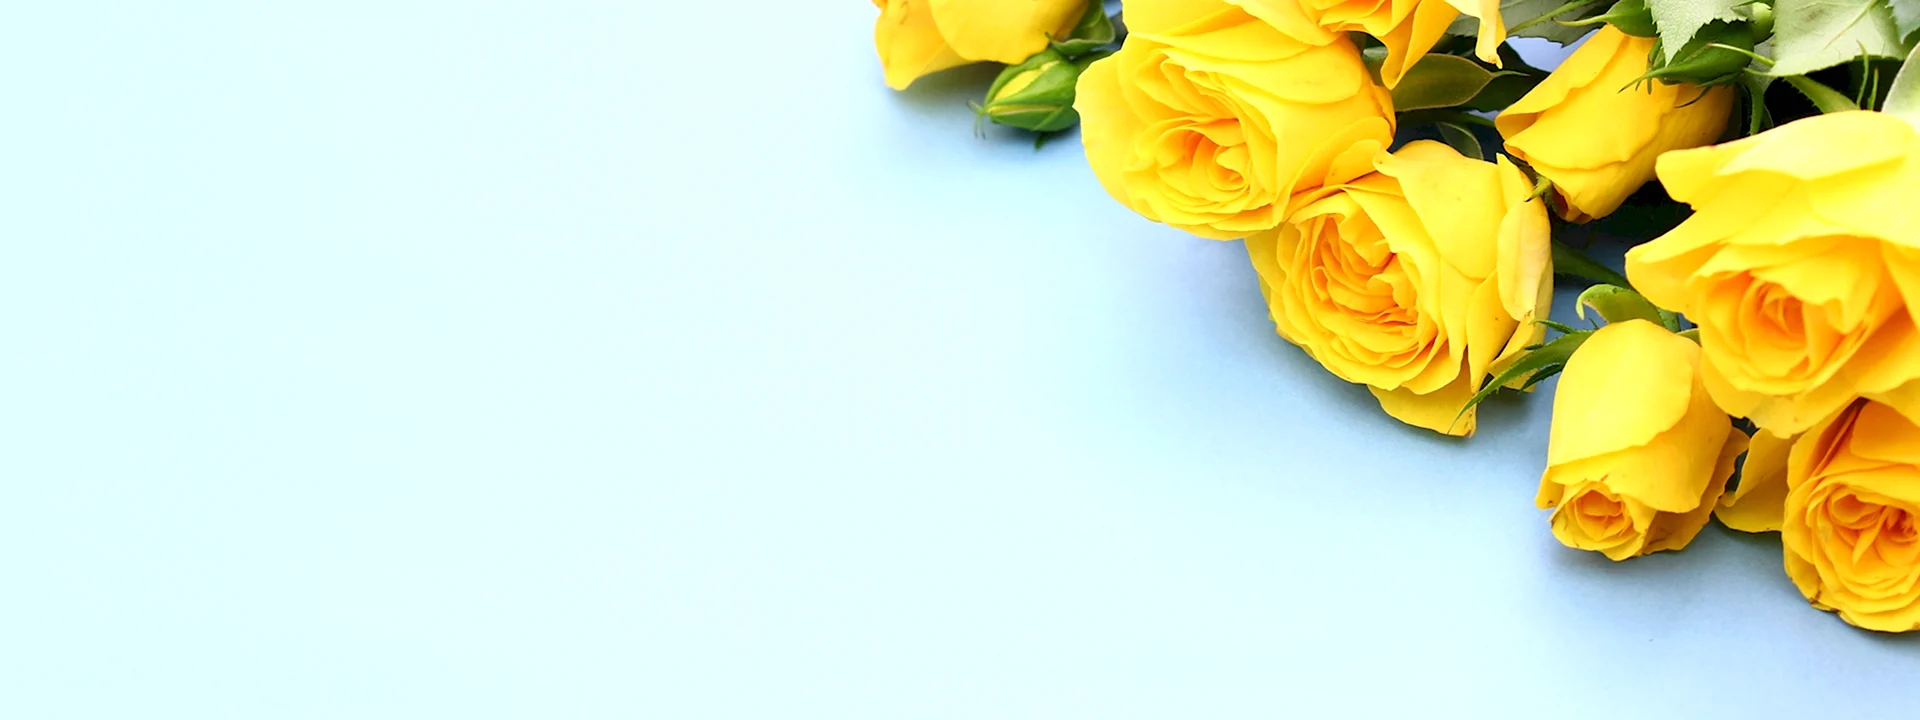 Роза желтая красивая на фон